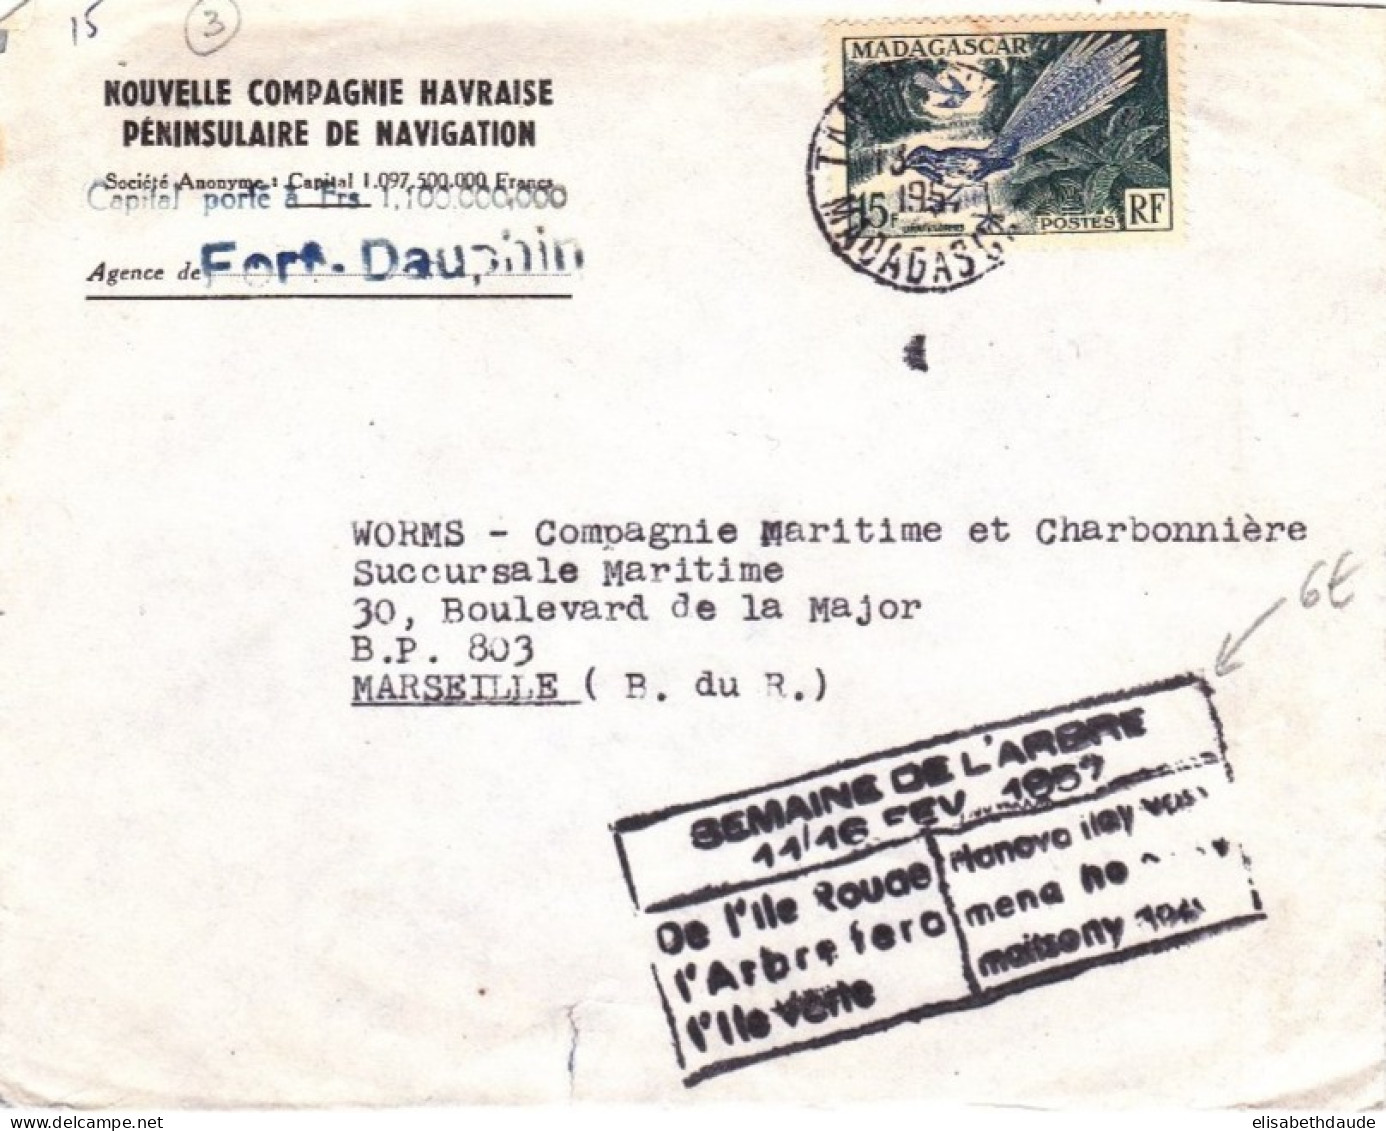 MADAGASCAR - 1957 - ENVELOPPE De FORT DAUPHIN Avec CACHET SPECIAL "SEMAINE DE L'ARBRE" Pour MARSEILLE - Storia Postale